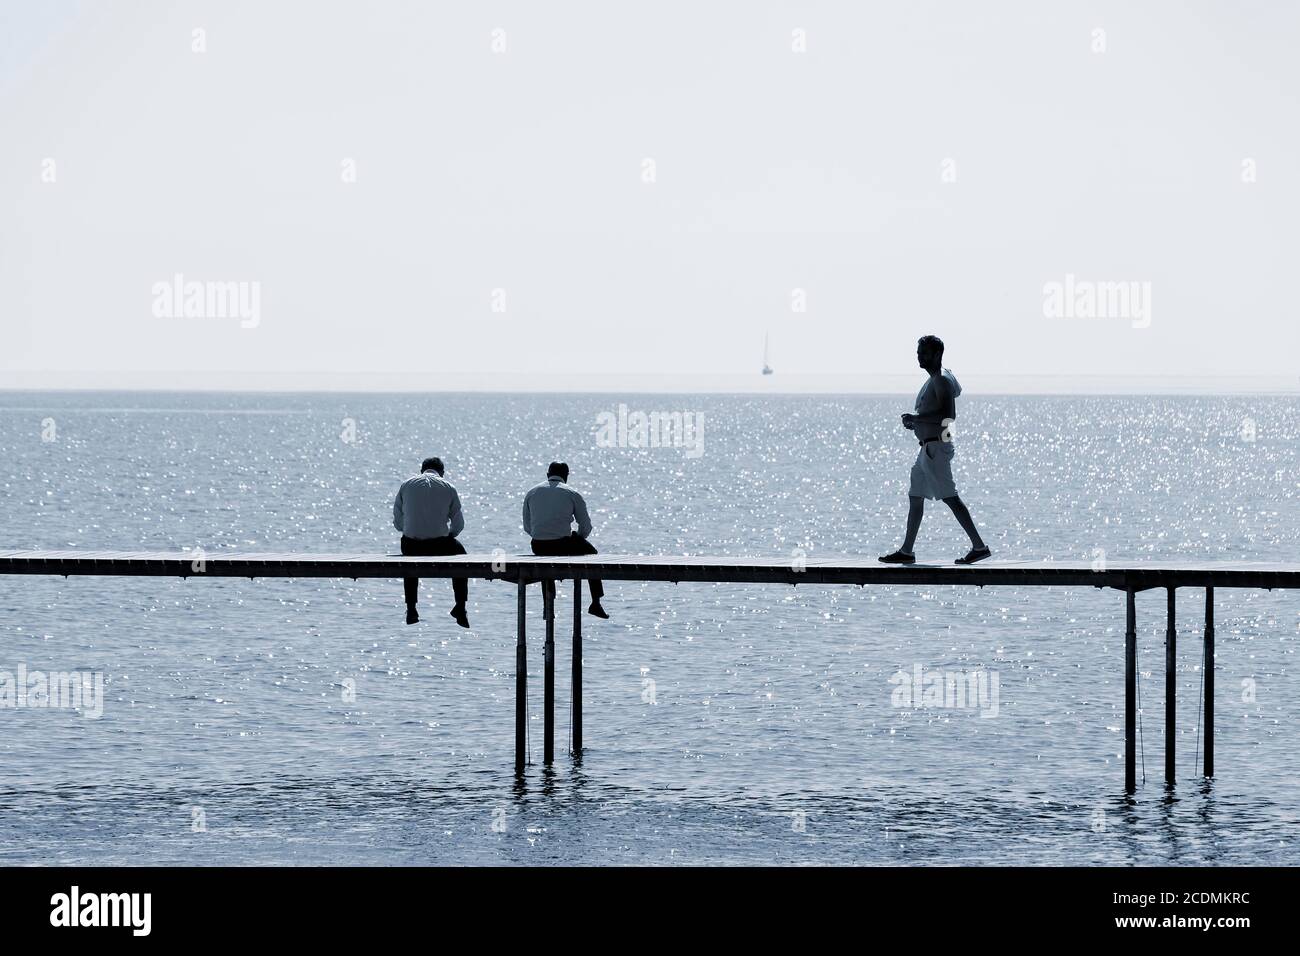 Two men are sitting, one man goes to the bathing jetty by the sea, Uendelige Bro, Infinite Bridge, Aarhus, Jutland, Denmark Stock Photo